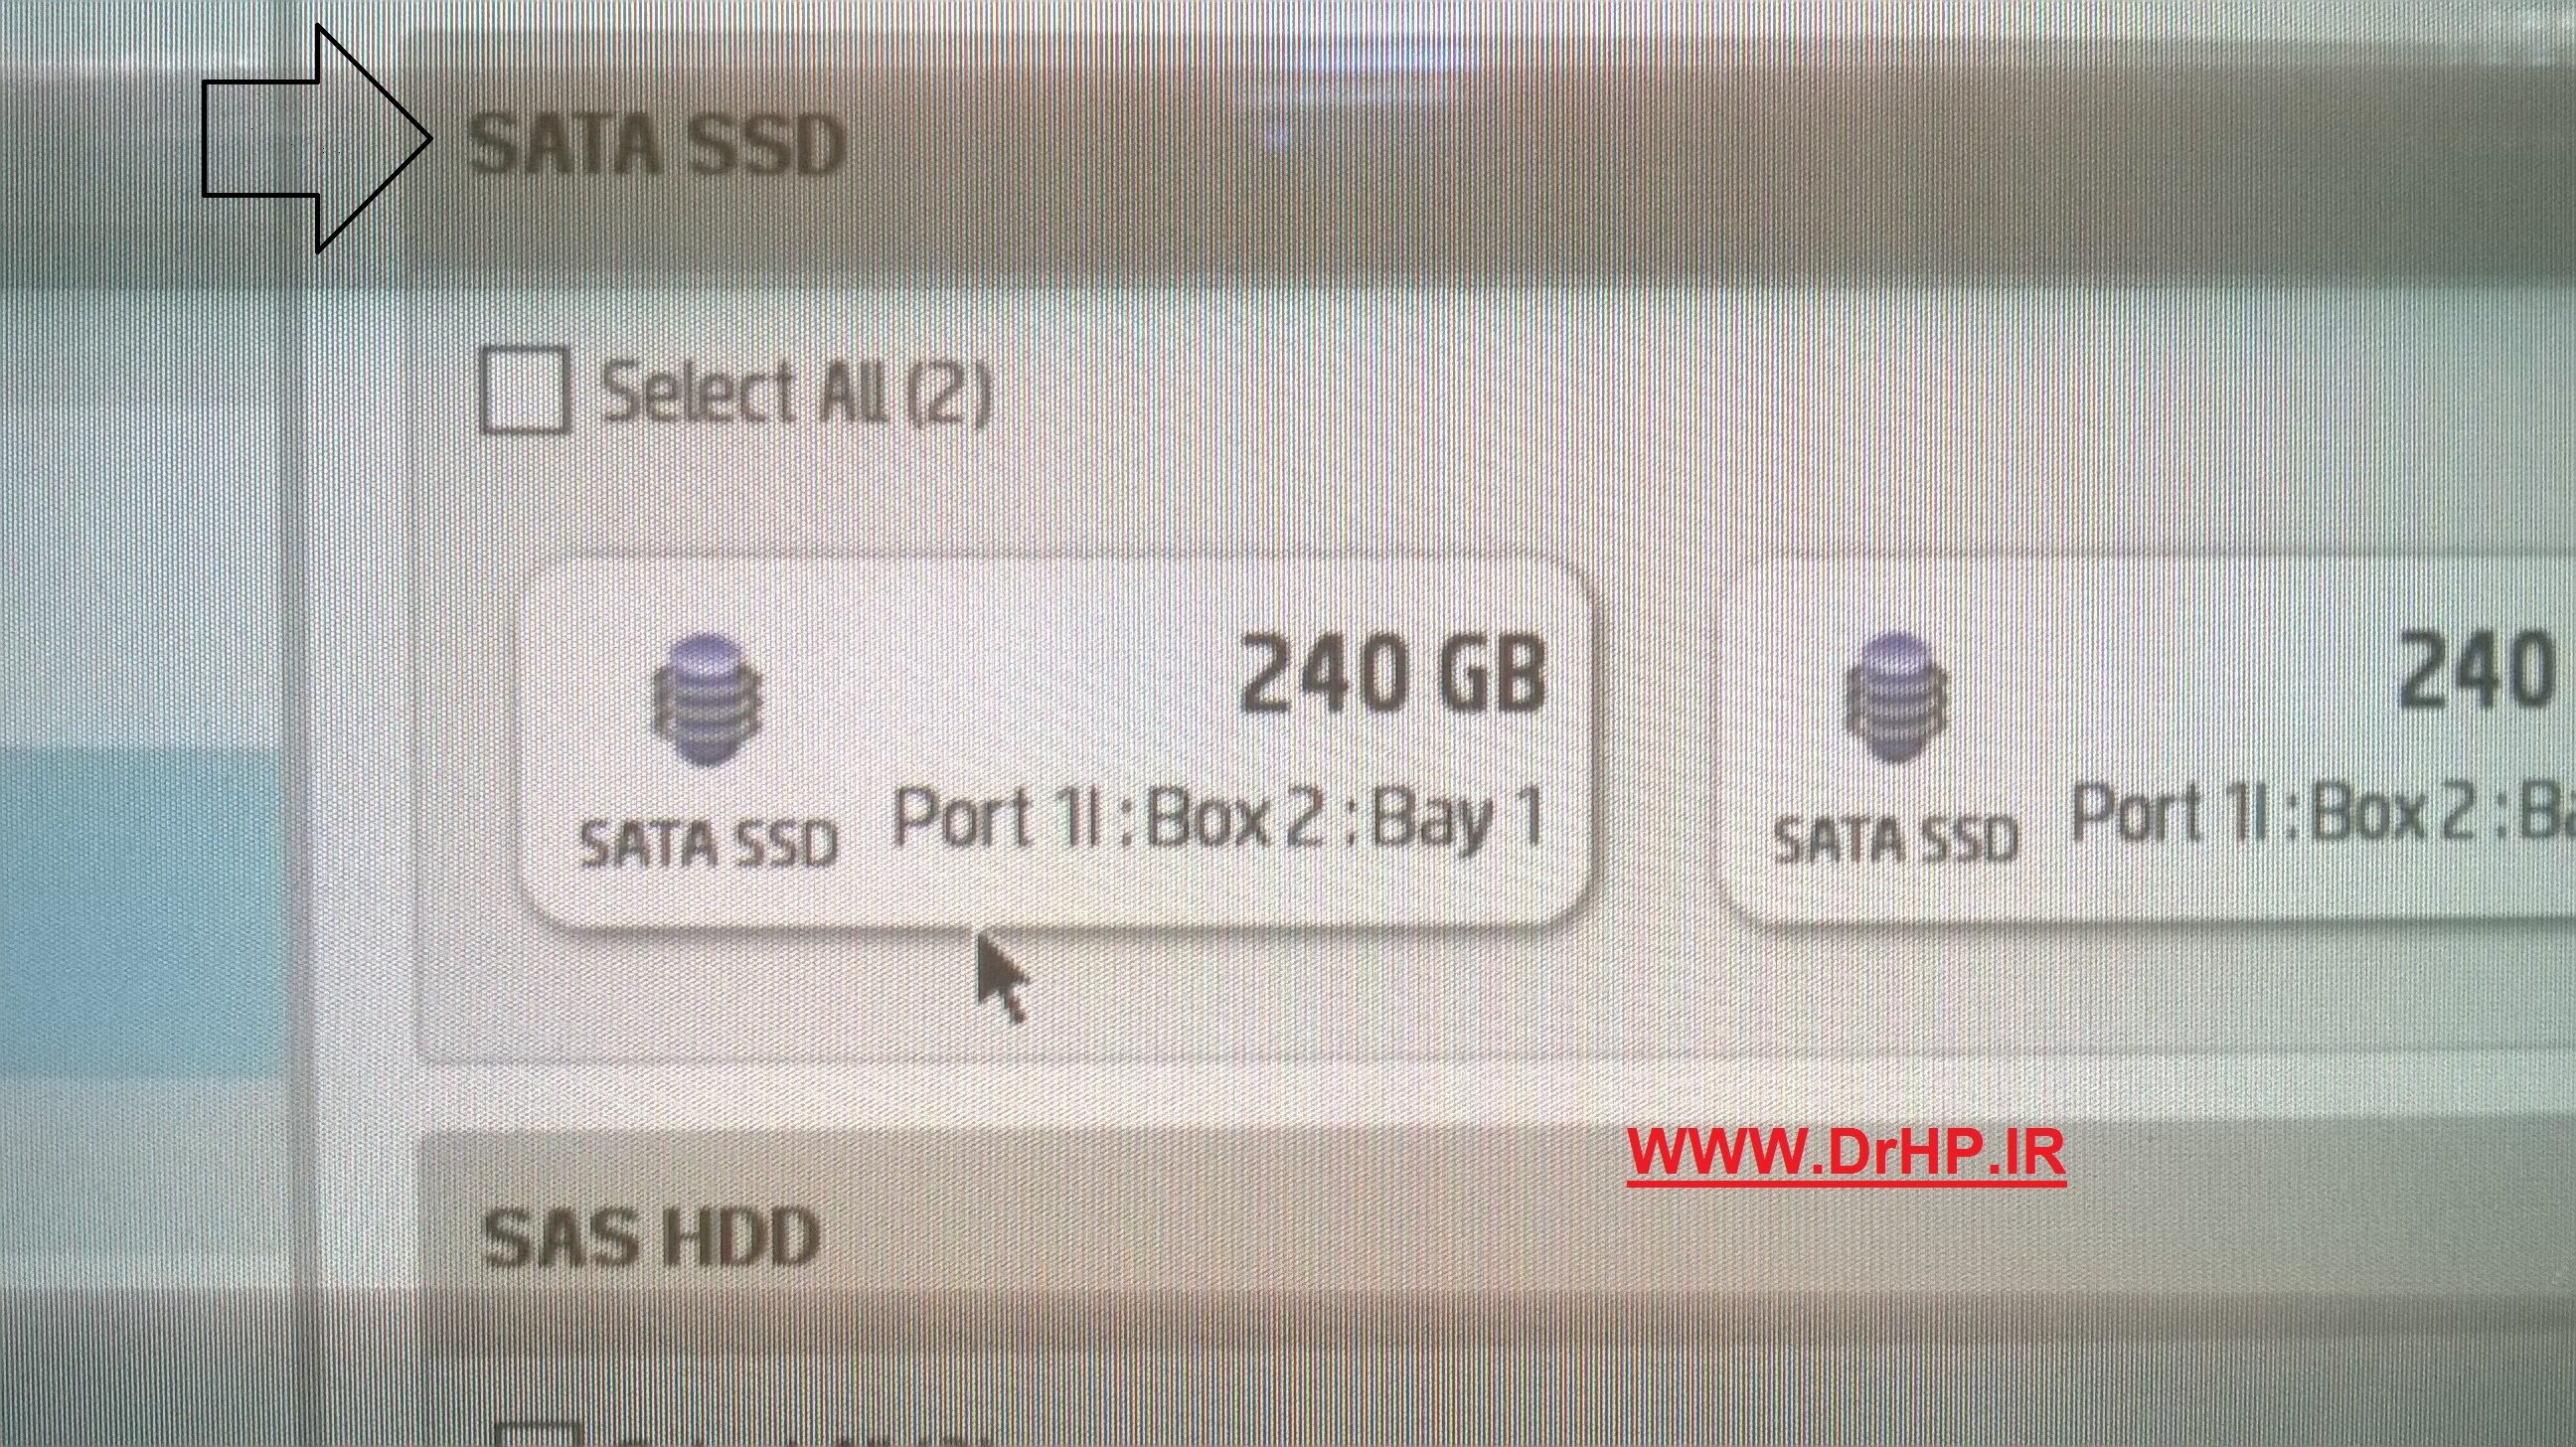  RAM+ DDR+ 3 + Hard +disks + 1000+ GB+ 7200+ RPM+Monthly +Bandwidth + 10 TB + Uplink + 1 +Gbits + Operating +system + Cent +OS+ 5.5 + VMware +ESXi 4.1 + VMware +ESXi +5 + Fedora 13 + openSUSE+ 11.2 +Windows +Web +Server +2008+R2+ 64 bit + Windows +Server +2008+R2+ Standard+ Edition +64 bit + Windows Server 2003 Standard Edition-64 bit- +Address++شبکه+storage+سرور+ هاي+ اچ پي+سري+ proliant+ILO+DL+380+G8+DL+380+G7+DL+580+G7+PC-SERVER+PC RACK+Troubleshooting+PORT+DL+980+G7+SAN + STORAGE+RAM+HARD+CPU برنامه+ نويسي+سرور+ هاي+ Blade+WORK+ STATION+power+تعميرات+NAS+ SAN+DAS+UPS+سوئيچ+هاب+رک+ml110+EMC+ سرور اچ پي, سرورhp, سرور, hp server, hp-سرور اچ پي, سرورhp, سرور, hp server, hp سرور اچ پي با ضمانت قطعات اصلي و خدمات پس از فروش در سراسر ايران فروش انواع سرور HP DL & ML +HP DL380 G7 HP +DL+580+ G+7+HP +DL+380+p +Gen+8HP +DL+380+e +Gen+8HP +DL+30 +G8+واردکننده ++مستقيم +تمامي+ تجهيزات+++ HP سرور +بهترين+ قيمت+ سرور HP+محصولات+ اورجينال+ HP با ضمانت+ +طلايي+HP +DL380 +G7 +HP+ DL+360+ G7+ HP +DL+120 + HP+ DL+580+ فروش+ قطعات+++ سرو+ HP+ با قيمت +مناسب+بهترين+ قيمت+ رم+ HP + +فروش+ رم HP +4+GB+ DDR3+ PC3+10600+R +با قيمت استثنايي و ضمانت طلايي فروش رم 8 HP 8GB DDR3 PC3-10600R با قيمت استثنايي و ضمانت طلايي فروش رم HP 16GB DDR3 PC3-10600R با قيمت استثنايي و ضمانت طلايي فروش++ هارد HP+ 146+ GB+ SAS لوازم +++ ++ جانبي+ سرور+ اچ پي+ + تعميرات+ SERVER+ HP+ + نقد + بررسي+ سرور+ اچ پي+ + مشاوره و آموزش سرور +HP+ +برنامه+ سرور+ اچ پي+ نقد+ + بررسي+++ سرور +HP + برنامه +SERVER +اچ پي+ + مشخصات+ سرور+ HP +تعميرات+ سرور+ اچ پي + قيمت++ سرور +HP + قيمت+ سرور+ اچ پي + فروش+ اقساط+ سرور +HP +لوازم+جانبي+ سرور+ اچ+ پي + تعميرات SERVER HP+* نقد + بررسي+ سرور+ اچ پي++ + مشاوره و آموزش سرور HP+ سريال hp++ پارت+ نامبر +hp, +سريال+ نامبر+ براي+ ilo+3 +hp+ ilo+ 3+ سريال+++hp+سريال+ نامبر+کد+ +ريجستر +ilo +hp+چک +کردن +شماره +سريال+ قطعات++ سرور hp+ چک کردن ++ سايت +HP+ چک کردن+ قطعات+ اصلي hp, پارت نامبر اچ پي , چک کردن sn سرور+ در آوردن+ پارت نامبر+ سرور هاي+ اچ پي+چک +کردن +شماره سريال +HP+ درباره ي+ سرورهاي+ hp+ چک کردن+ سريال+ سرور+ +hp+ ilo+ 2 + سريال+ نامبر+ وارد کردن+ سريال سرور hp, سريال نامبر براي ilo+لايسنس+ ilo+3+ +لايسنس+ ilo+4+لايسنس+ سرور+ hp+ چک کردن+ شماره+ سريال در سايت+ hp+ چک کردن+ سريال+ نامبر+ سرور+ هاي +hp+ در سايت+ اصل بودن+ سرور ++ مشخصات+ +سرور+ اچ+ پي++ * برنامه+ سرور+ اچ+ پي++ + نقد+ +و بررسي ++ HP + +برنامه SERVER+ اچ+ پي ++مشخصات سرور HP + + تعميرات+ سرور+ اچ+ پي+ + يمت سرور HP * قيمت سرور اچ پي * فروش اقساط سرور HP * خريد SERVER HP * بهترين قيمت SERVER اچ پي * بهترين قيمت SERVER HP * فروش اينترنتي SERVER اچ پي * برنامه سرور HP * خريد SERVER اچ پي * عکس و تصاوير SERVER HP * بهترين قيمت سرور اچ پي * فيلم و ويدئو سرور اچ پي * بهترين قيمت سرور اچ پي + * عکس و تصاوير SERVER اچ پي * فروش اقساط SERVER اچ پي + نقد +و بررسي SERVER + * فروشگاه+ سرور+ اچ پي +* برنامه SERVER HP * تعميرات سرور HP * درايور سرور اچ پي * مشاوره و آموزش SERVER HP * لوازم جانبي SERVER+ اچ +پي * مشخصات SERVER اچ پي * مشاوره و آموزش SERVER اچ پي * قيمت SERVER اچ پي * بهترين+ قيمت+ سرور+ HP * فروشگاه+ SERVER+ اچ پي + لوازم جانبي +SERVER +HP * فروش+ اينترنتي+ سرور+ HP * فروش اقساط سرور اچ پي * فيلم +و ويدئو سرور HP +* فروش اينترنتي +سرور+ اچ پي+ + درايورسرور +HP +* قيمت SERVER HP * مشاوره و آموزش سرور اچ پي + خريد سرور + عکس + تصاوي+سرور اچ پي + بهترين+ قيمت +SERVER+ +اچ پي + +درايور +SERVER+ اچ پي فروش ويژه+ سرورهاي+ اچ + فروش +ويژه+ قطعات +سرور+ + فروش+ ويژه+ سرور+ فوجيتسو قيمت+ فروش+ انواع رم هاي سرور اچ پي + ram+ hp +server+فروش+ انواع+ رم هاي+ hp+ سرورهاي+ اچ پي + استوريج+ اچ پي +ذخيره+ اطلاعات+ تحت+ شبکه +دستگاه بکاپگيري + سيسکو + HP+ Storage+ Maxtronic + Server+ HP + My+ Sonicwall + HP+ Proliant DL380G7 HP Proliant+ DL+380+p+G8 + HP+ Proliant +DL+360+G7 + HP +Proliant +DL+120+G7 + HP =+Proliant +ML+110+G+7 + iSCSI +RAID+آشنايي+ با تکنولوژي +هاي SAN+ و NAS+++استوريج-nas-تفاوت-ويژگي-چرا san-چرا nas-تکنولوژي san-شبکه san -شبکه nas-شبکه فيبر-استوريج فيبر- پياده سازي nas-پياده سازي san-اموزش شبکه san-اموزش NAS-استوريج شبکه-پشتيباني STORAGE-استوريج-هارد استوريج nas هارد استوريج nas | -وارد كننده- تجهيزات- شبكه-و نماينده انحصاري- كيس هاي سرور-كي وي ام كنسول-استوريج -و -انواع پاور -سرور- به همراه متعلقات- جانبي -مي باشد.-و-شبك- آشنايي ب-ا ت-کنولوژي هاي -SAN و -NAS - مهندسيIT ه- SAN --مخفف Storage- Area-Network-.. SAN -تکنولوژي-. در اين -تکنولوژي -فضا,Hosting, منحصر به يک سرور -- Hard -Drive - تکنولوژي -SAN -جيست ؟ Storage- Area- Network -(SAN) - Information -Technology - در مورد -شبکه -san و تکنولوژي ا-ون- تکنولوژي هاي- ذخيره ساز- در ويندوز- سرور -2008-بخش سوم- Fibre+ RAID + CDP+ 6080+B + CDP +5040B+سريال ilo+++چک کردن+ فروش و تعمير و نگهداري دستگاه هاي HP , تعمير و نگهداري , كامپيـوتر. خريد سرور hp. تعمير hp. تعميرات hp. شرفروش و تعمير و نگهداري دستگاه هاي HP , تعمير و نگهداري , كامپيـوتر. خريد سرور hp. تعمير hp. تعم هداري , اصل بودن hp , نحوه تشخيص ارجينال بودن هارد سرور , تشخيص اصل بودن اچ پي , تشخيص اورجينال بودن هارد اچ پي , راه هاي شناسايي سرور Hp اورجينال , تشخيص اصل بودن هارد , نحوه تشخيص سرور اصل hp , تشخيص هارد اورجينال , ريداندنت , اجزا سرورچيست , تشخيص اصل بودن سرور اچ پي , تشخيص اصل بودن سرور , اصل بودن قطعات hp , تشخيص -اصل -بودن -قطعات- سرور -تشخيص -صل ب-ودن -قطعات سرور -HP برنامه ريزي سوئيچ , کانفيگ سوئيچ hp,High,performance,computing,with, accelerated ,servers, , برنامه سوئيچ Hp , سوييچ هاي hp , تنظيمات سوييچ hp , نرم افزار کانفيک سويچ hp, دستورات سويچ hp, راهنماي سوييچ hp, کانفيگ سويچ hp, برنامه ريزي سوييچ, سوئيچ هاي Hp, سوئيچ هاي قابل برنامه ريزي, برنامه ريزي سوييچ hp, ارتباط با Switch hp, برنامه ريزي براي پورت سوىچ سيسكو, طريقه کانفيگ سوييچ hp, برنامه ريزي سوئيچ شبکه, روش استفاده از کنسول سوئيچ hp, کانفيگ کردن سوئيچ hp, نرم افزار telnet براي کانفيگ سويچ hp, نحوه دادن آي پي به سوئيچ HP, دستورات سوئيچ hp, برنامه ريزي سوييچ ها, برنامه ريزيي سوئيچ سيسکو, سوئيچ, 1910 ,hp,خريد سرور, HP, , چگونگيه, تشخيص,اصلي بودن ,مادربورد , پاور,ريدانددنت ,تشخيص -قطعات- سرور ,تشخيص ,اصل,بودن ,قطعات ,سرور ,اصل بودن ,قطعات ,سرور, hp تشخيص اصل بودن محصولات hp , تشخيص ,اصل, قطعات سرور HP , قطعات,سرور , اصل بودن سرور ,hp , چک کردن,اصلي ,بودن,قطعات,